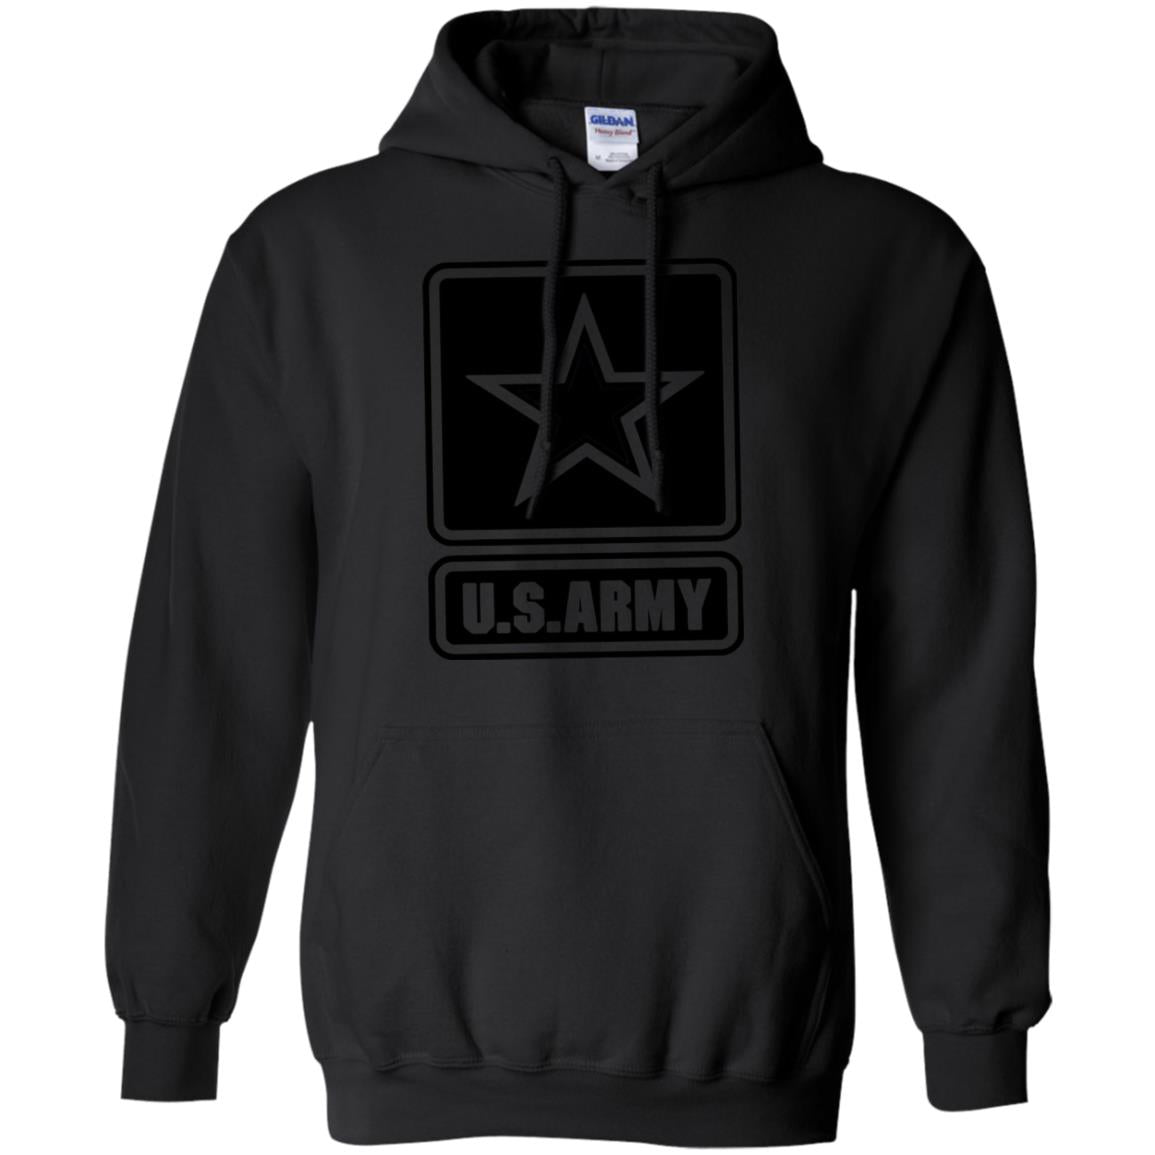 Us Army Black Logo United States Design T-shirt